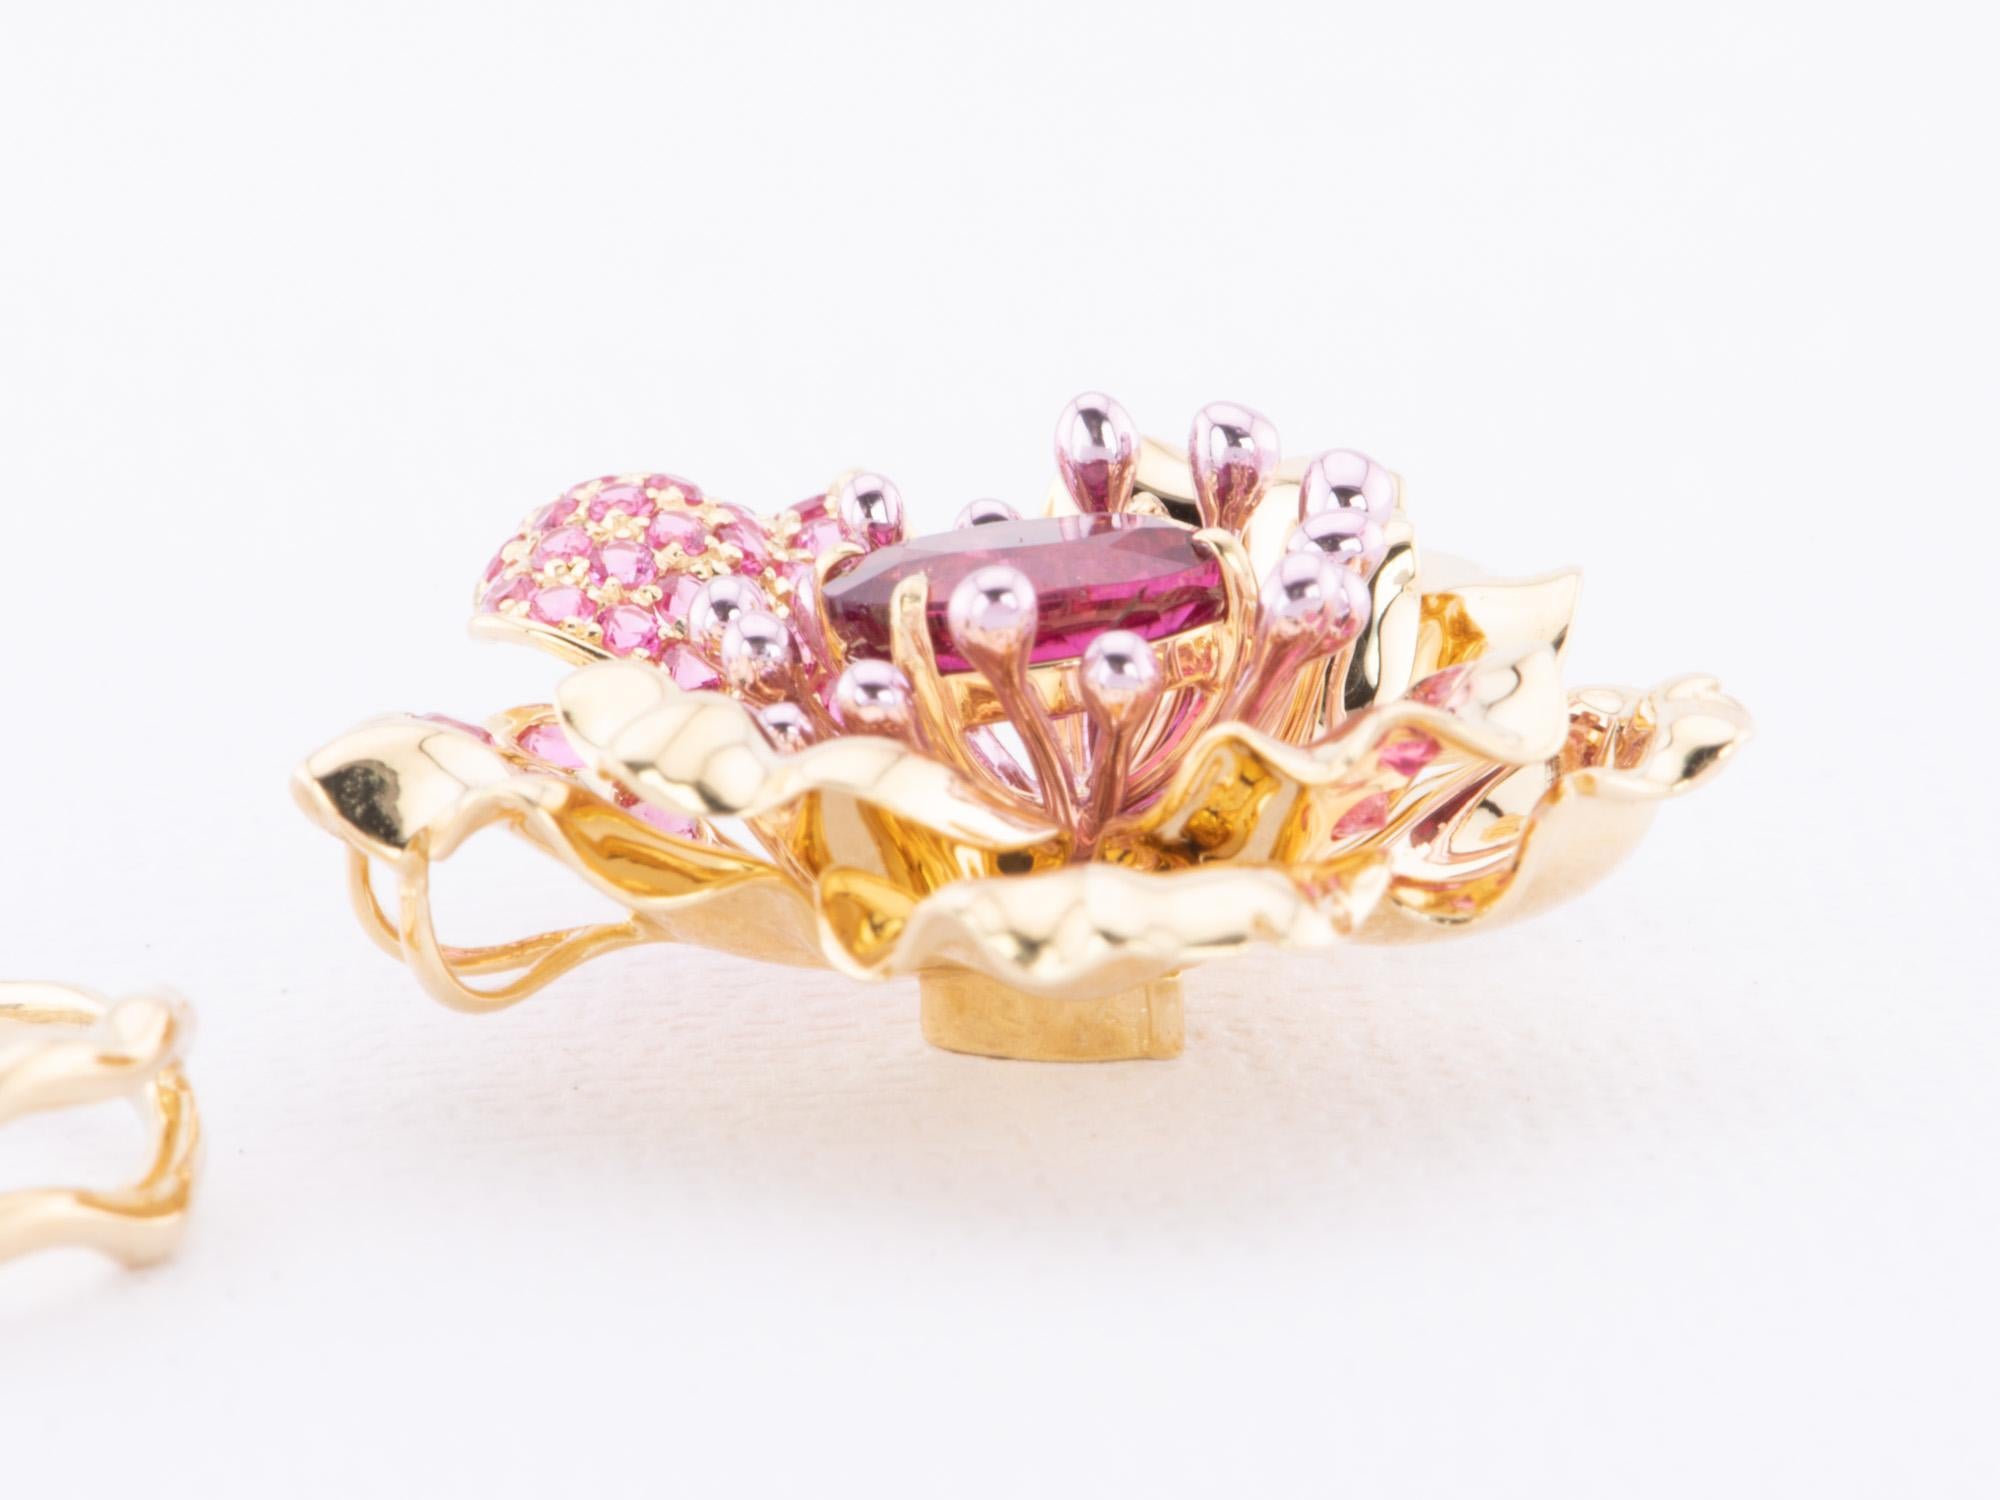 Art Jewelry Rubellite Tourmaline Center Flower Ring / Pendant 18K Gold R6641 For Sale 5